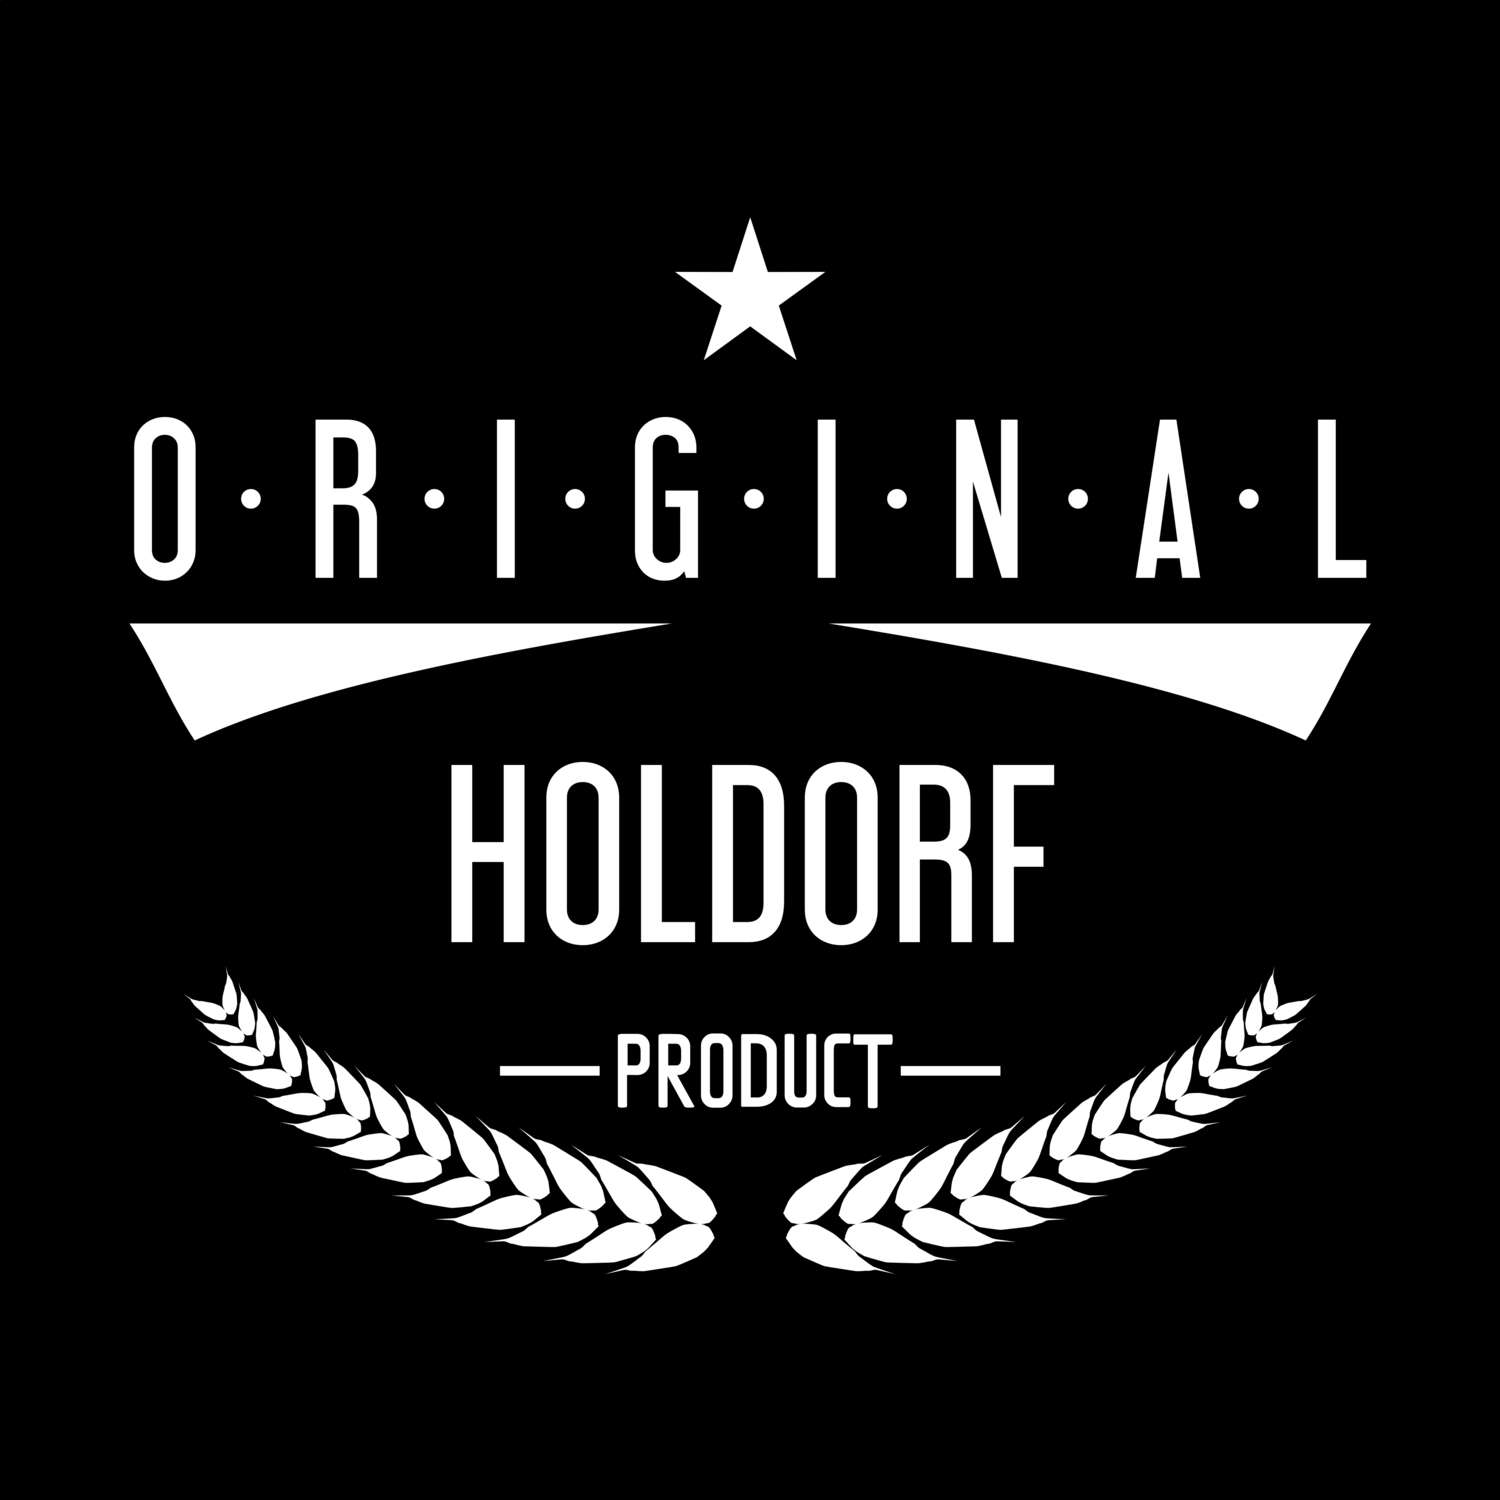 Holdorf T-Shirt »Original Product«